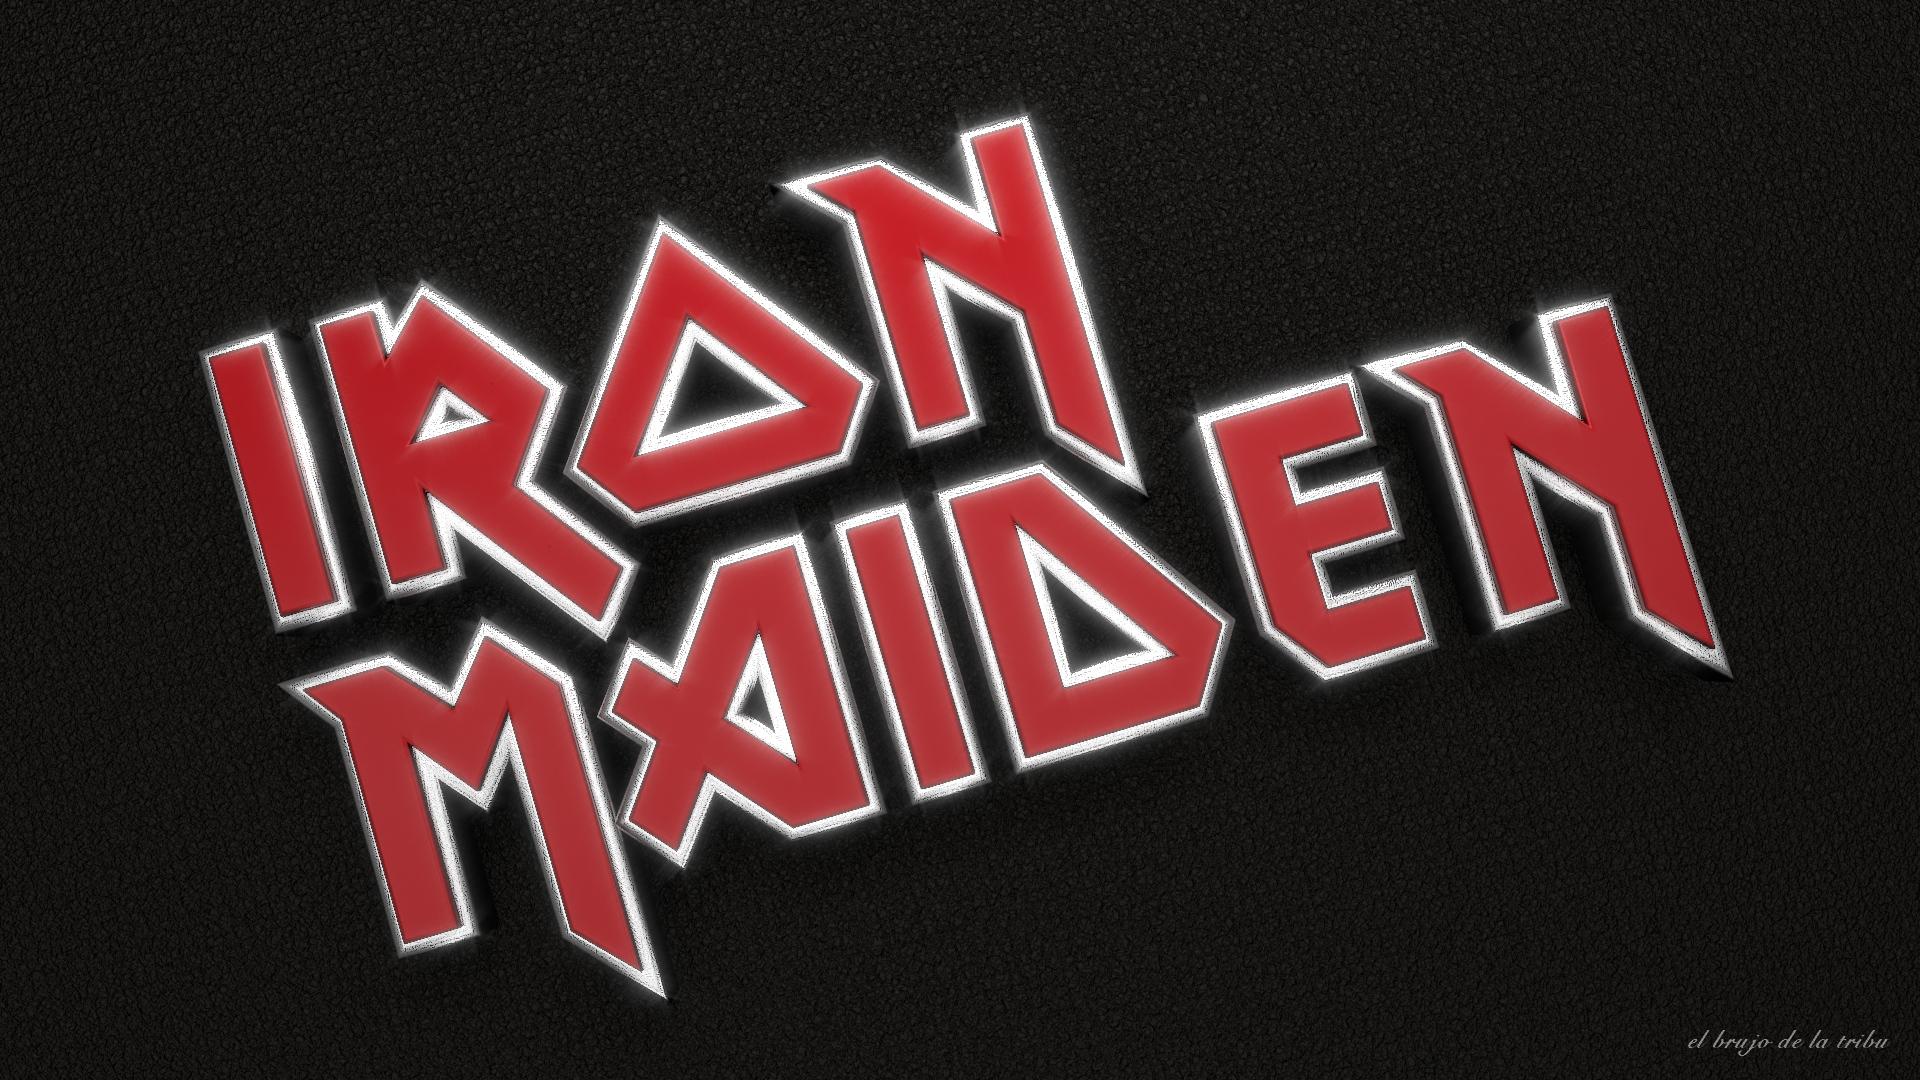 Iron Maiden Logo Wallpapers - Top Free Iron Maiden Logo Backgrounds ...